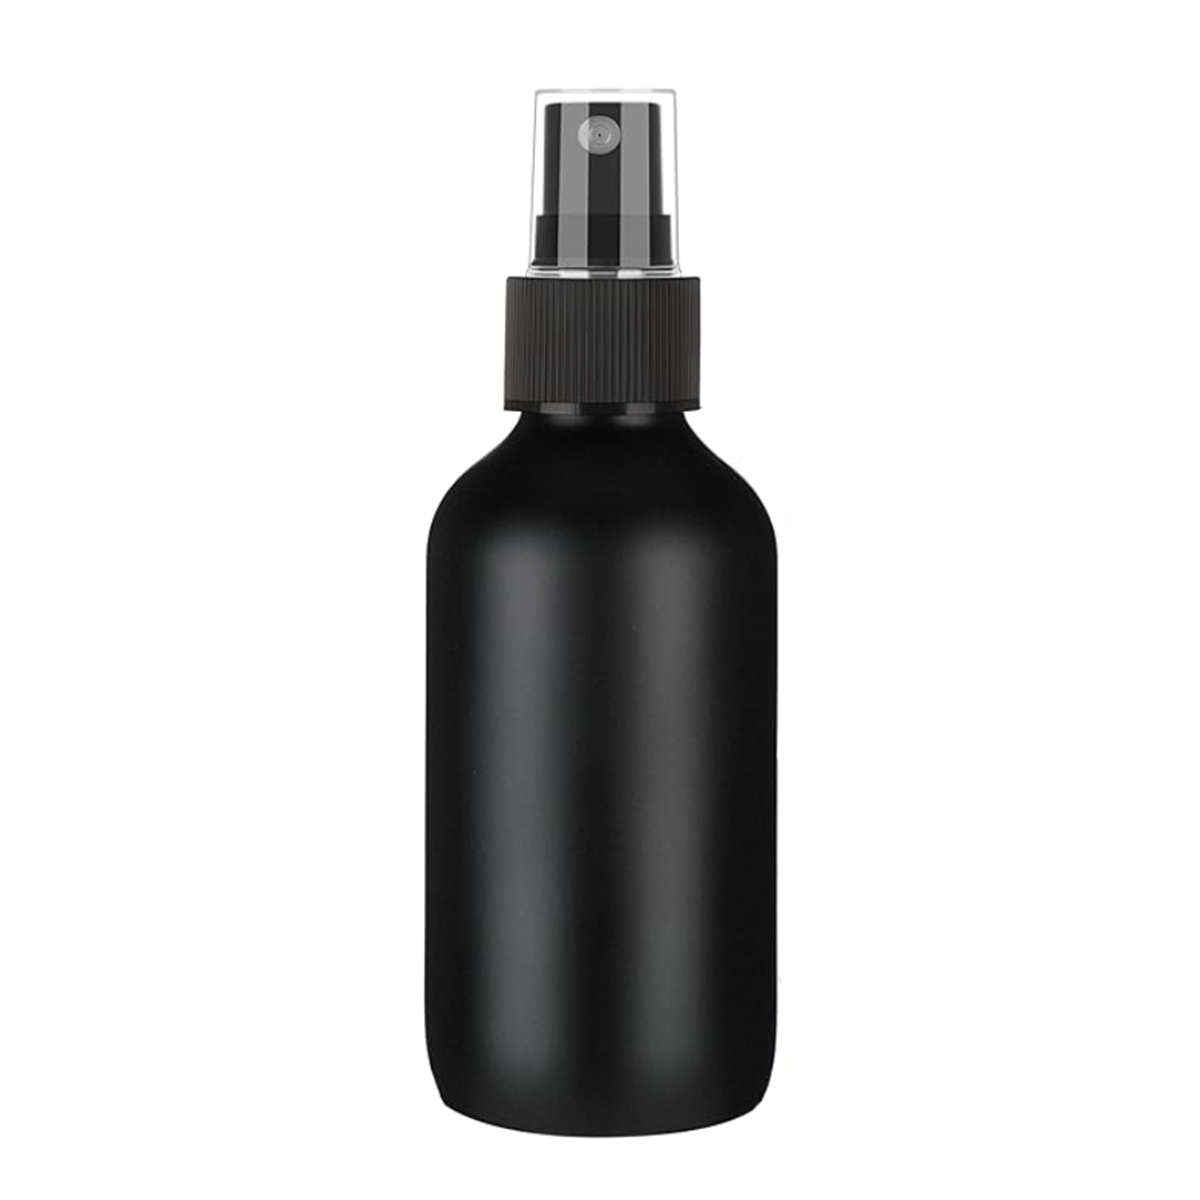 4 oz. Matte Black Glass Room Spray (Set of 12)